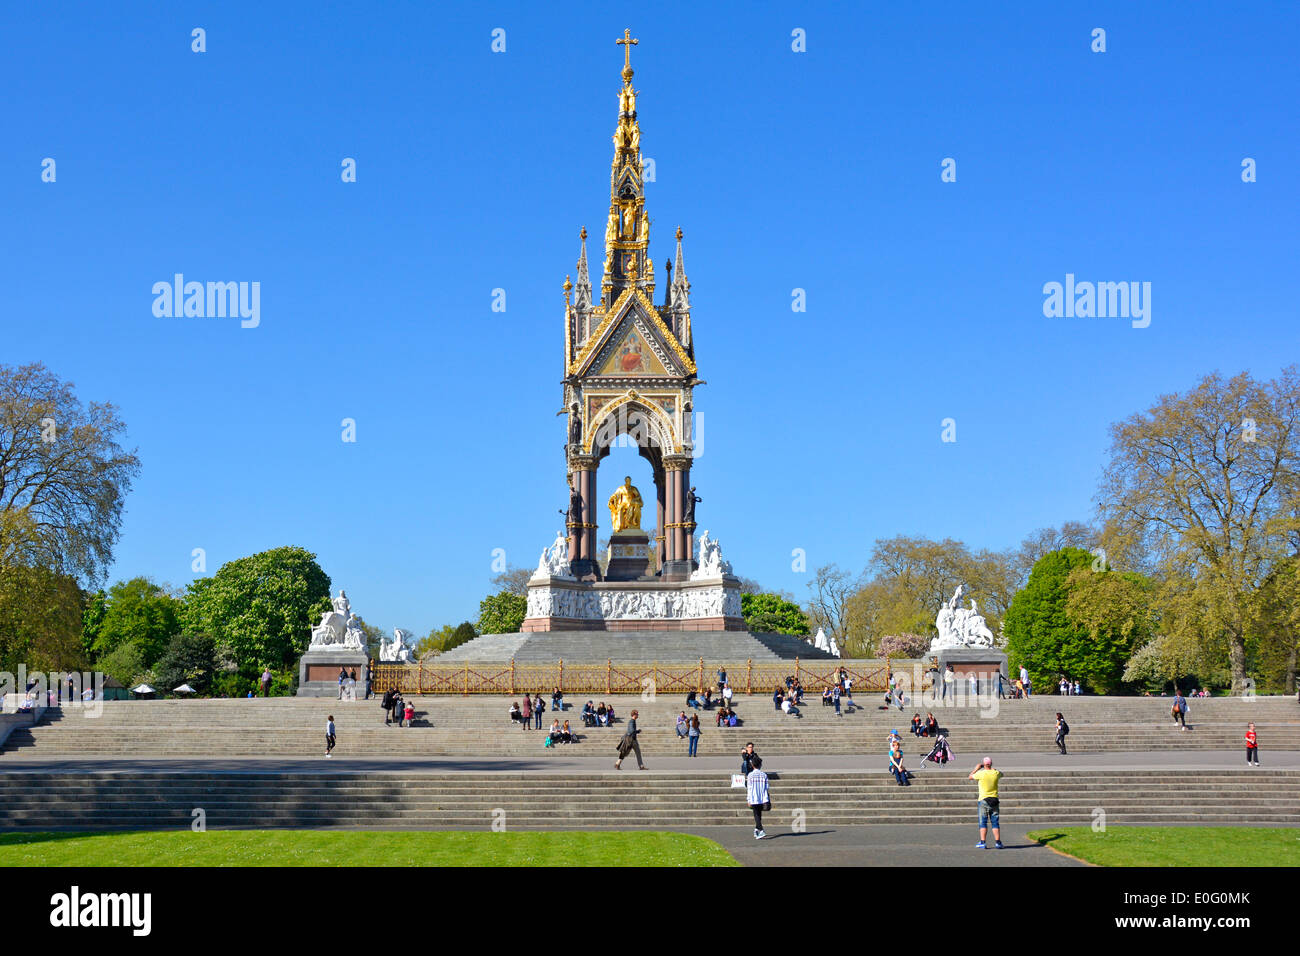 Historisches viktorianisches Londoner Tourismusdenkmal Albert Memorial in Kensington Gardens Landschaft mit Prince Albert sitzend Blue Sky Day London England Großbritannien Stockfoto